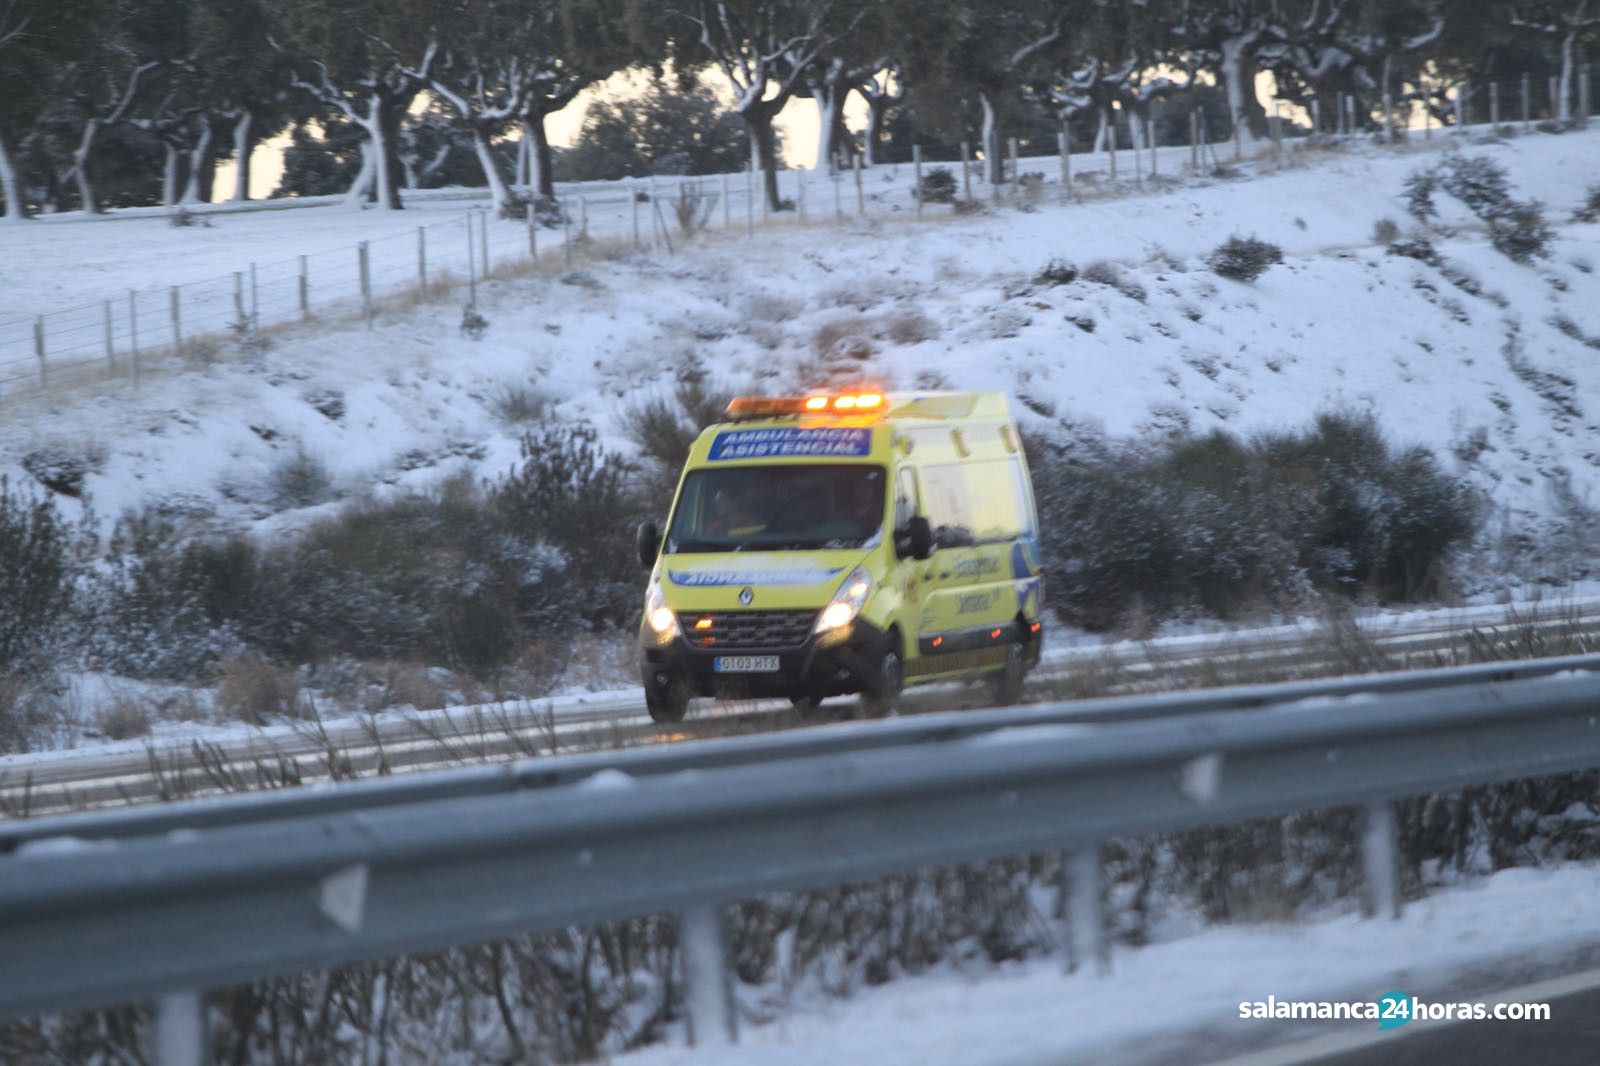  Nieve carretera ambulancia (17) 